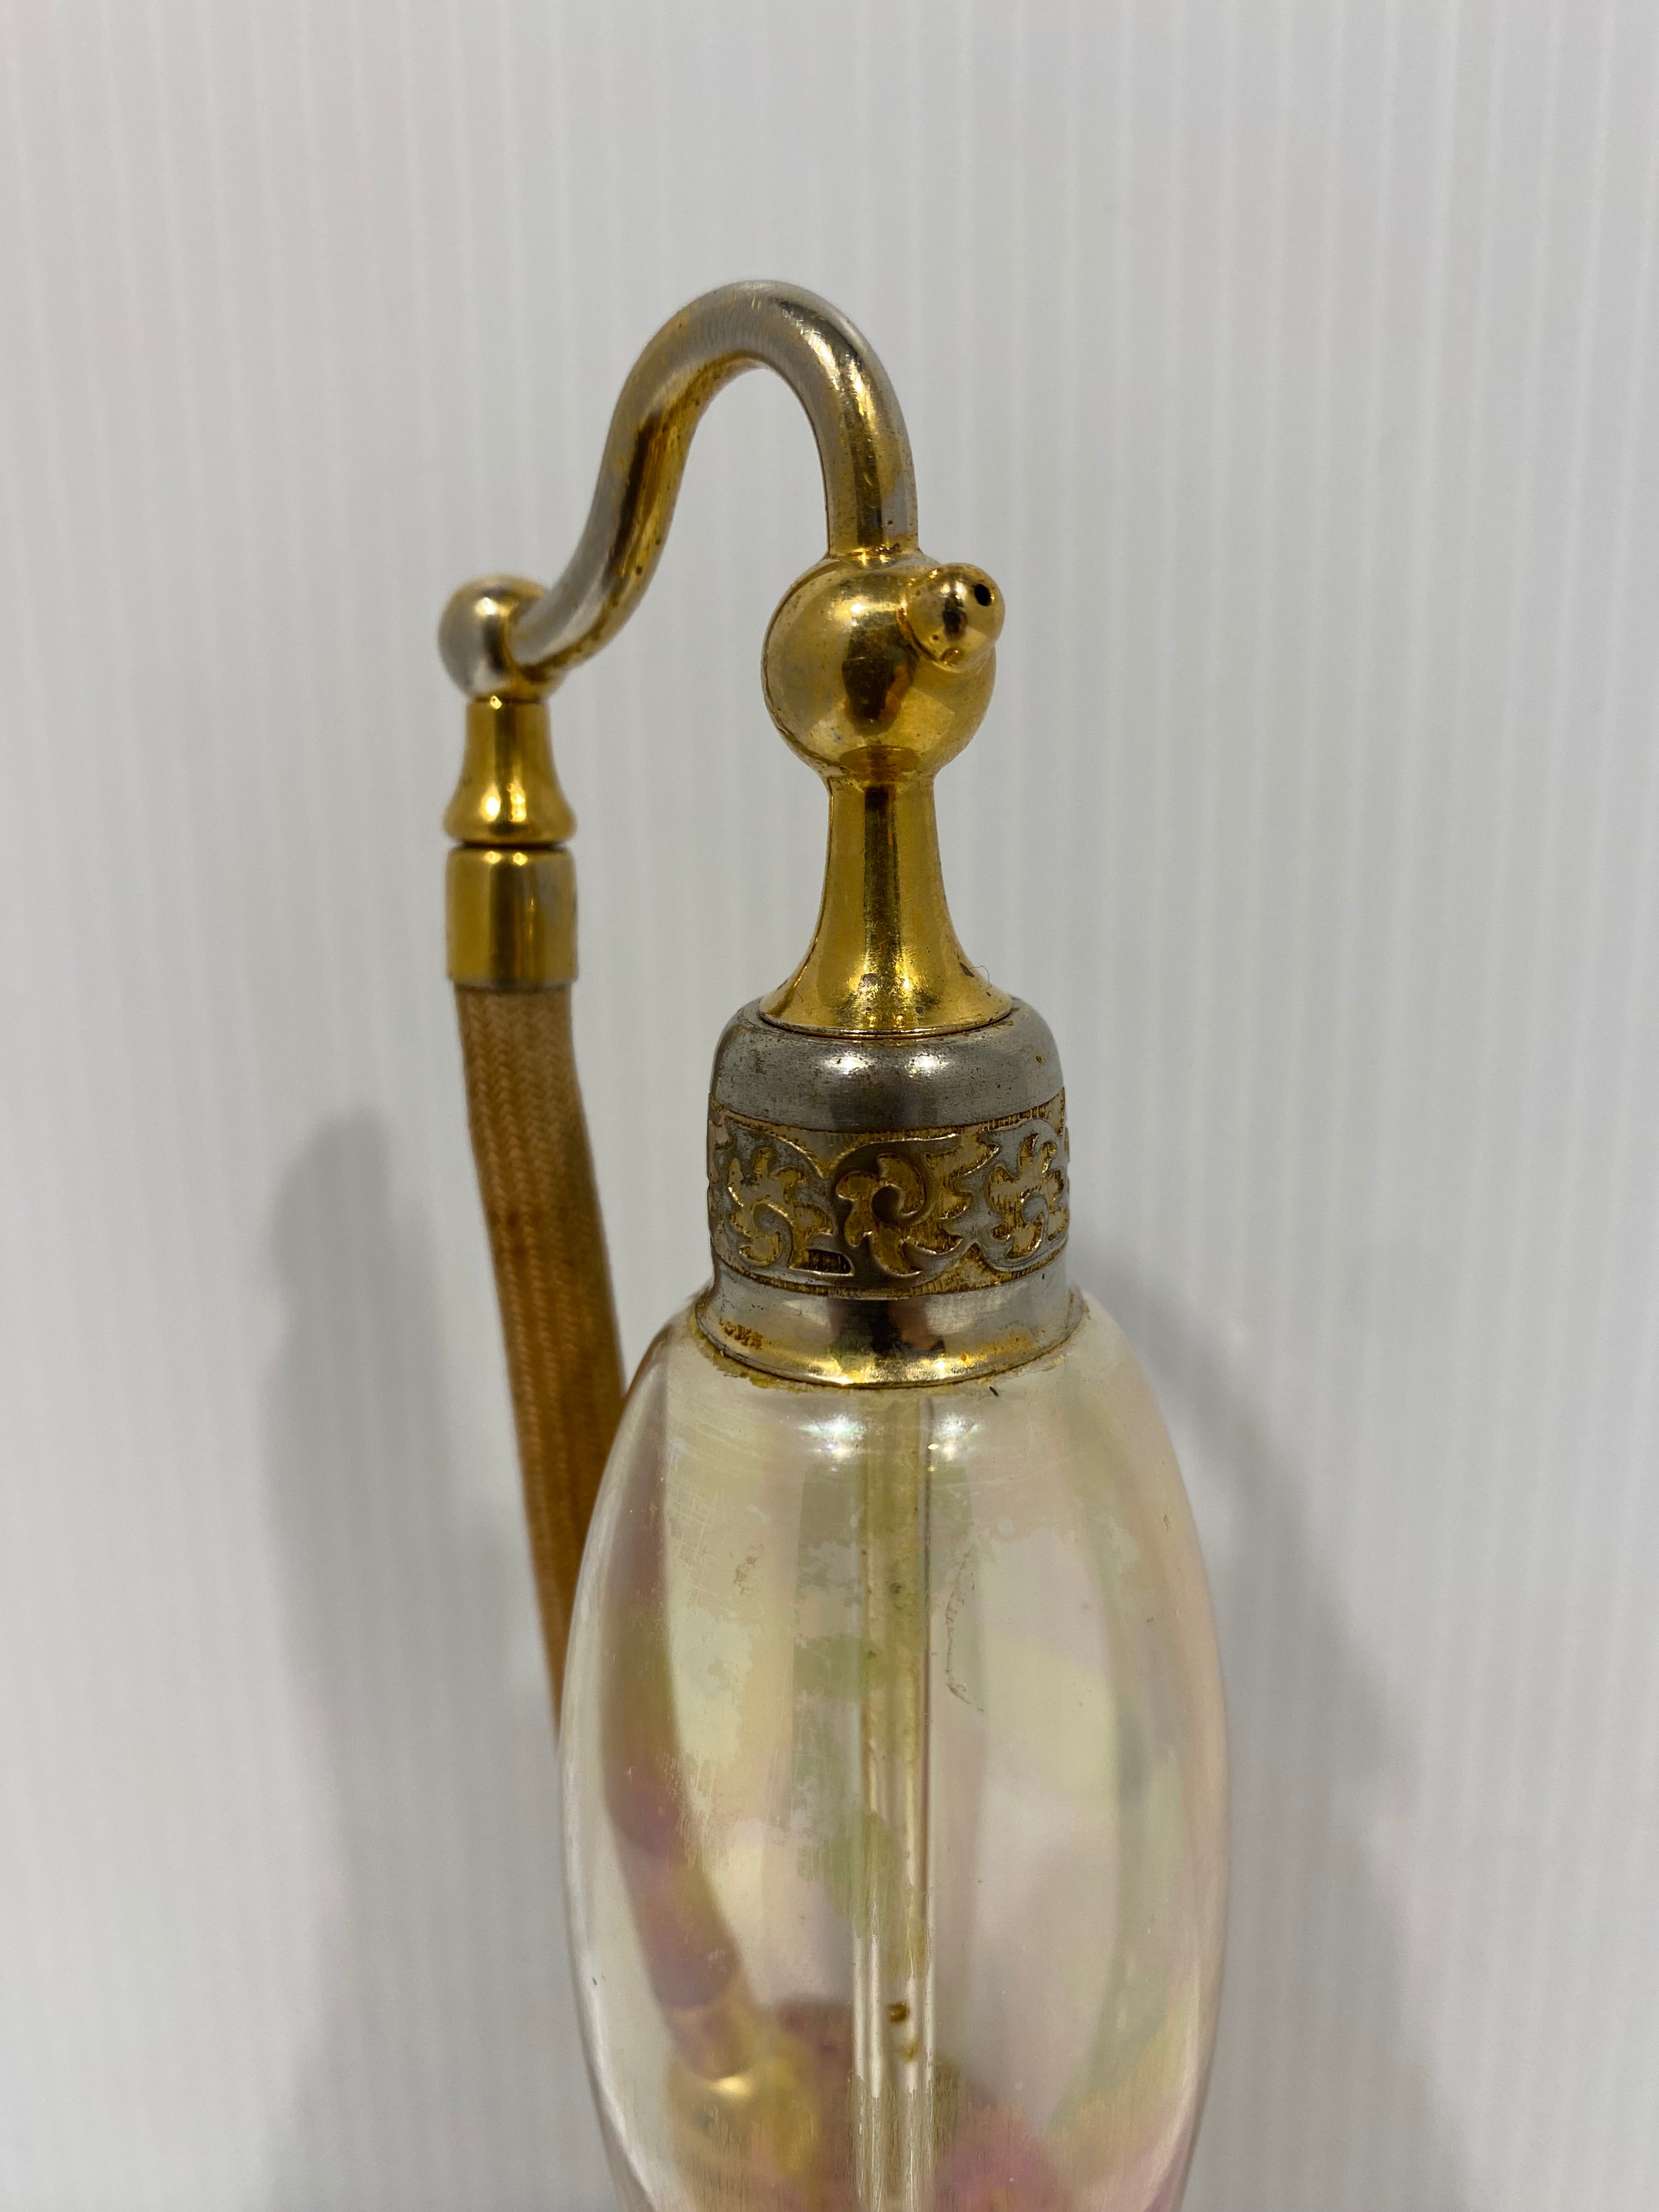 Rare Art Deco DeVilbiss pump atomizer Gold Aurene Glass perfume bottles.